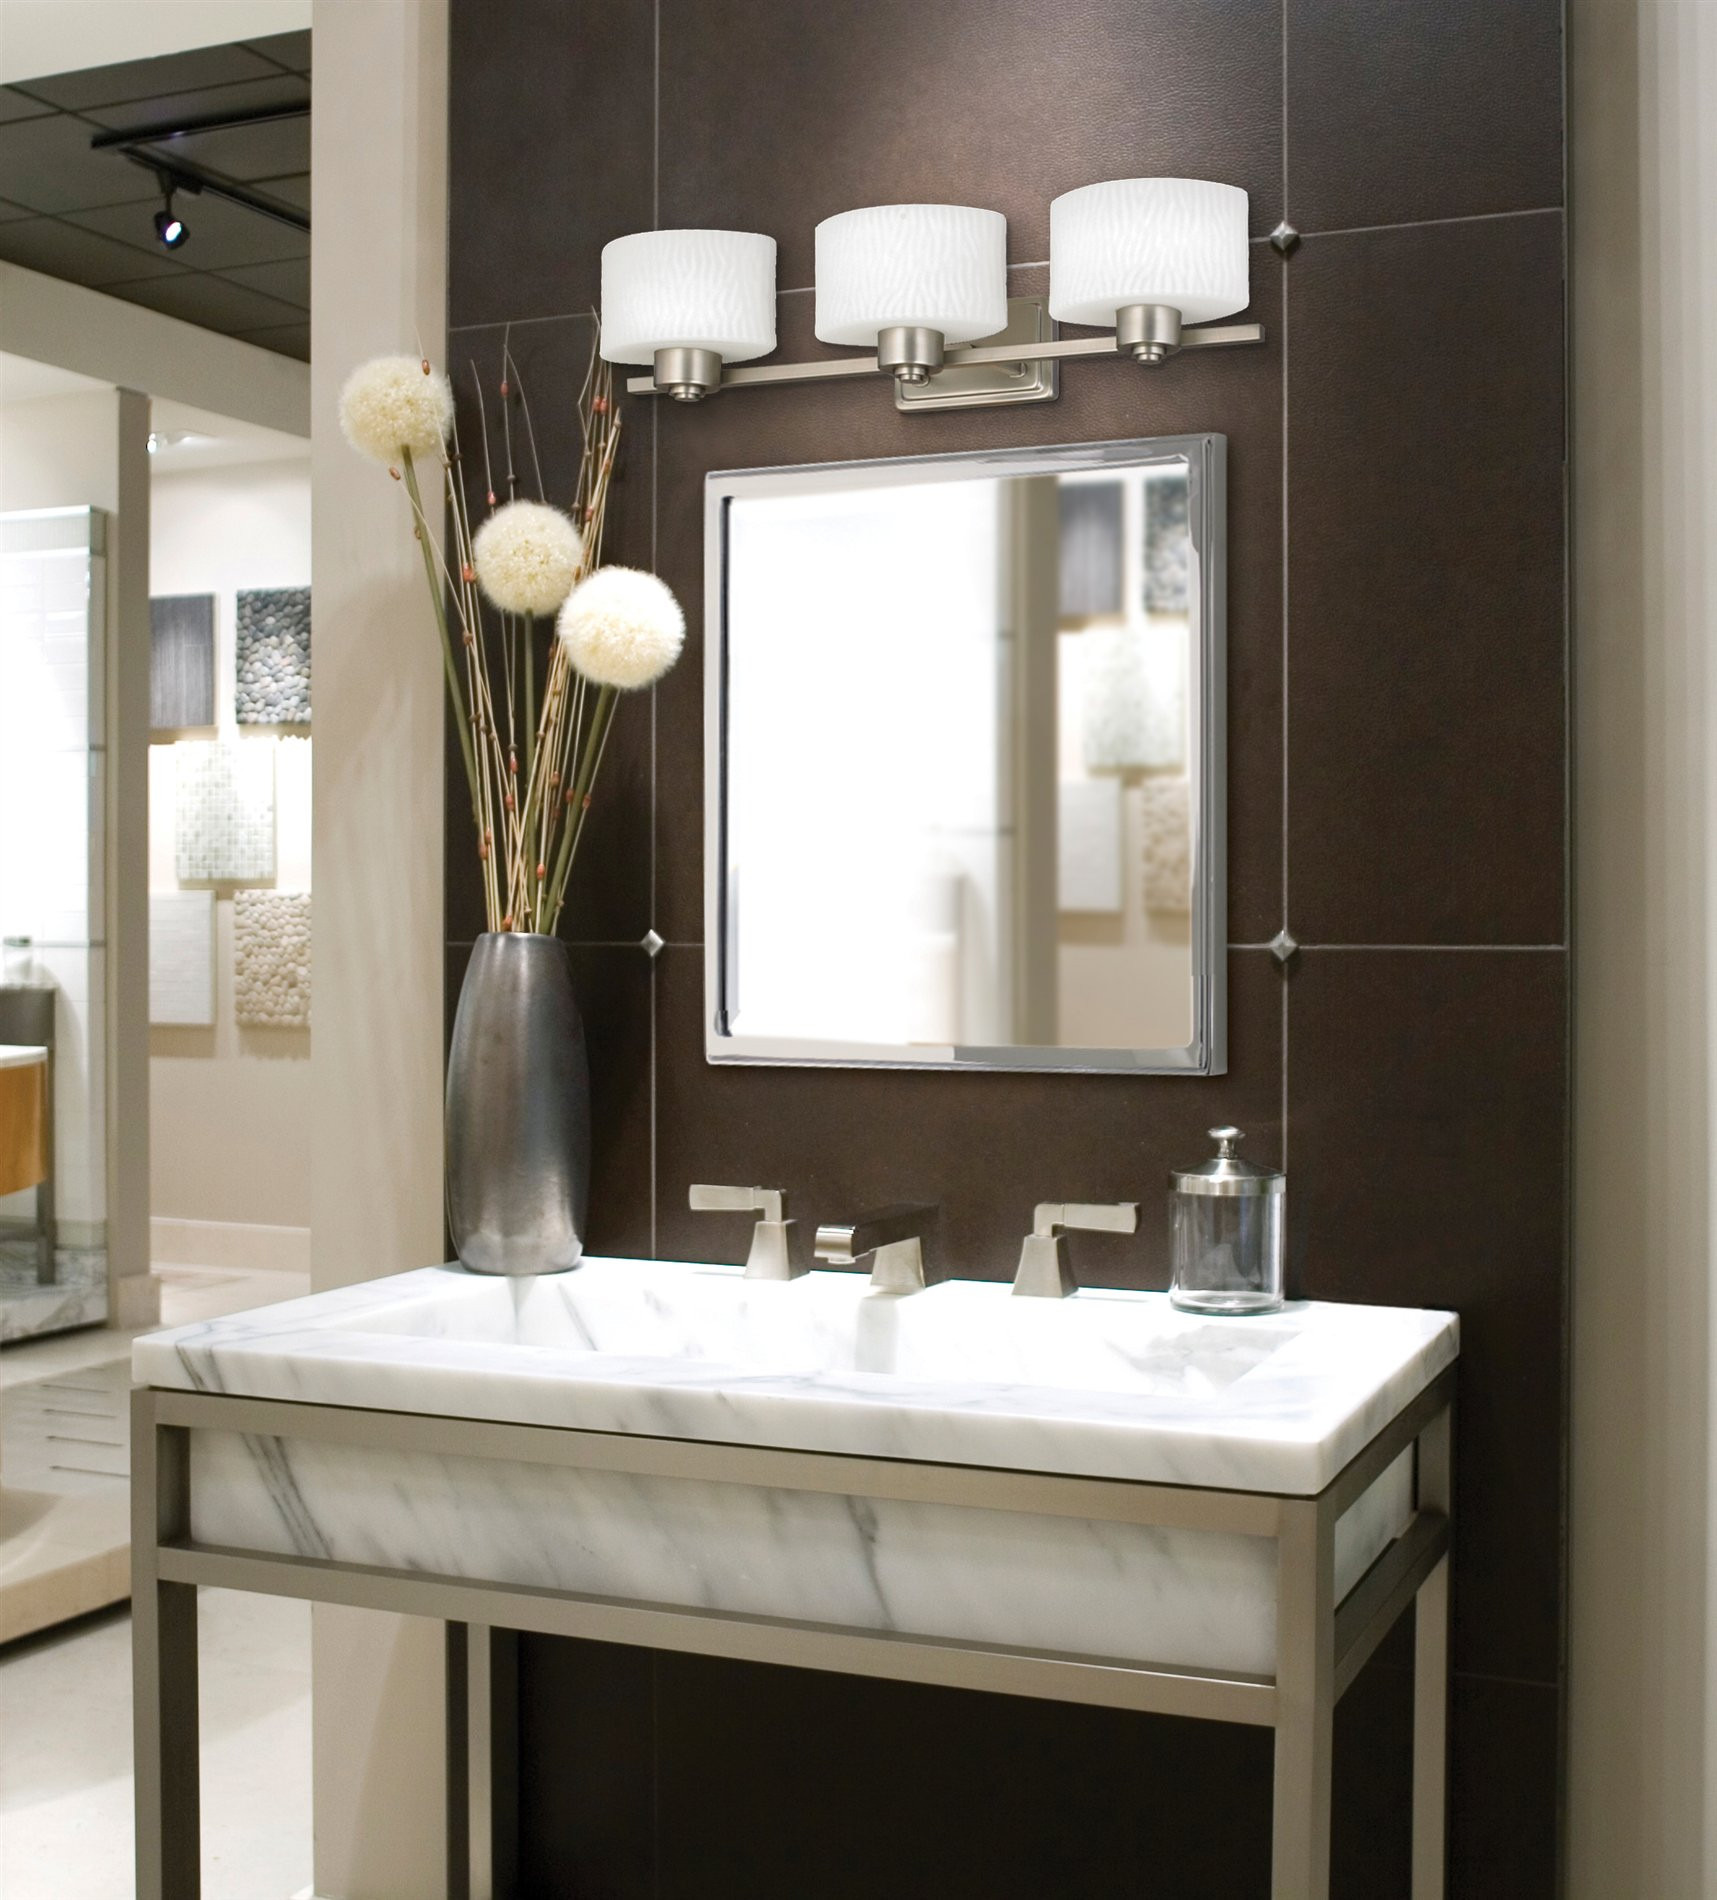 Bathroom Vanity Mirror Ideas
 Bathroom Vanity Mirrors for Aesthetics and Functions